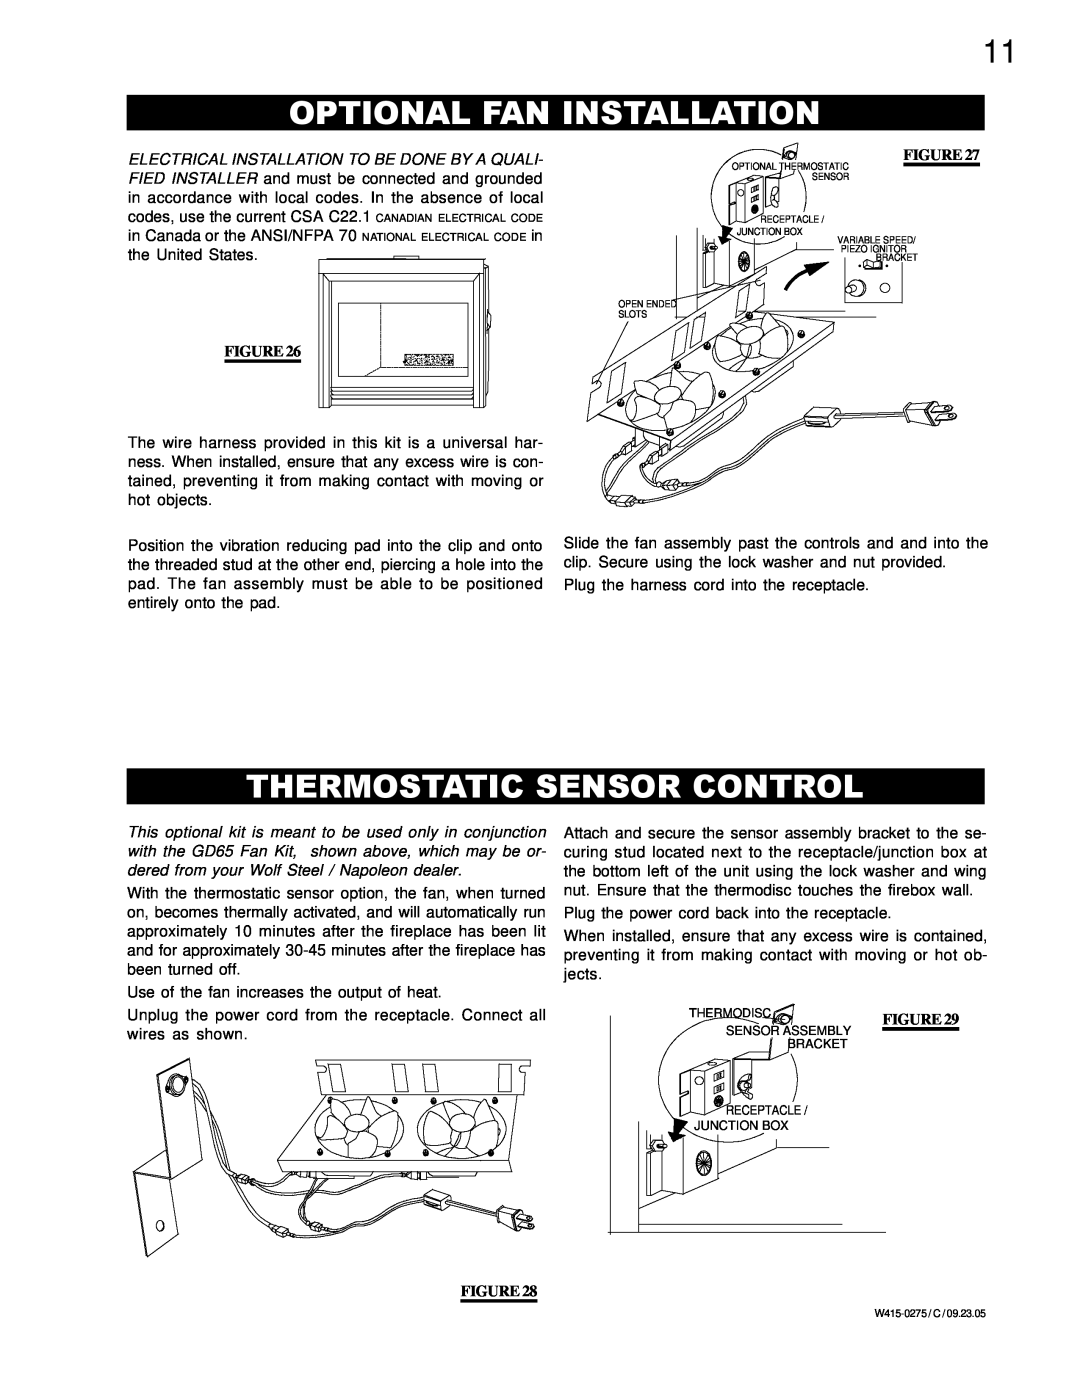 Napoleon Fireplaces BGNV36P, BGNV36N manual Optional Fan Installation, Thermostatic Sensor Control, Thermodiscfigure 